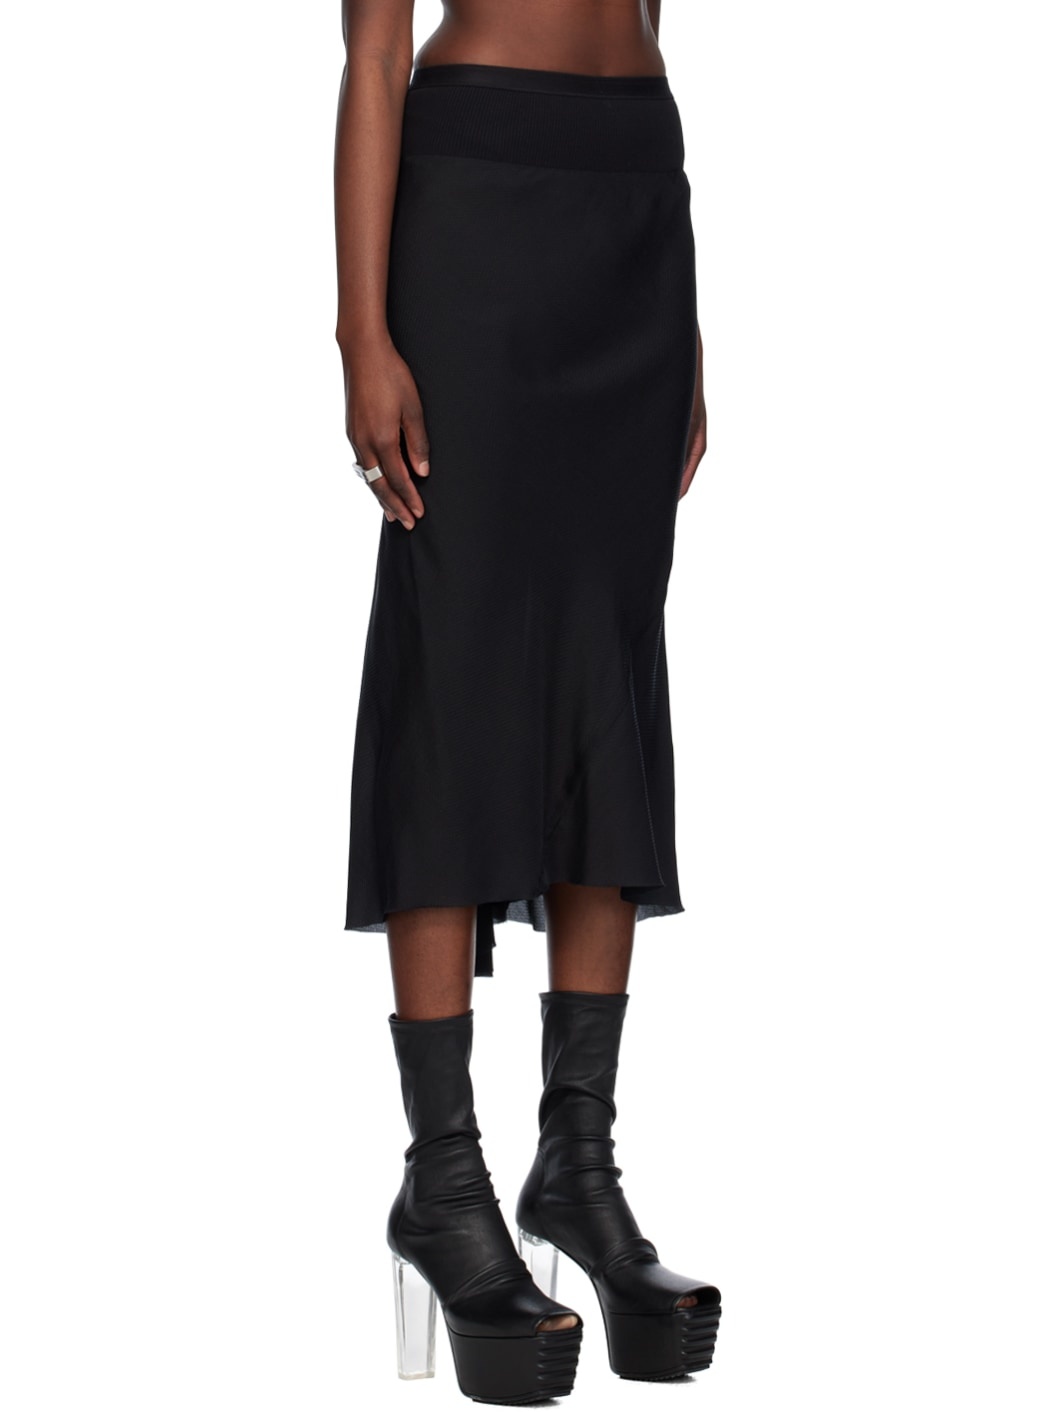 Black A Line Midi Skirt - 2